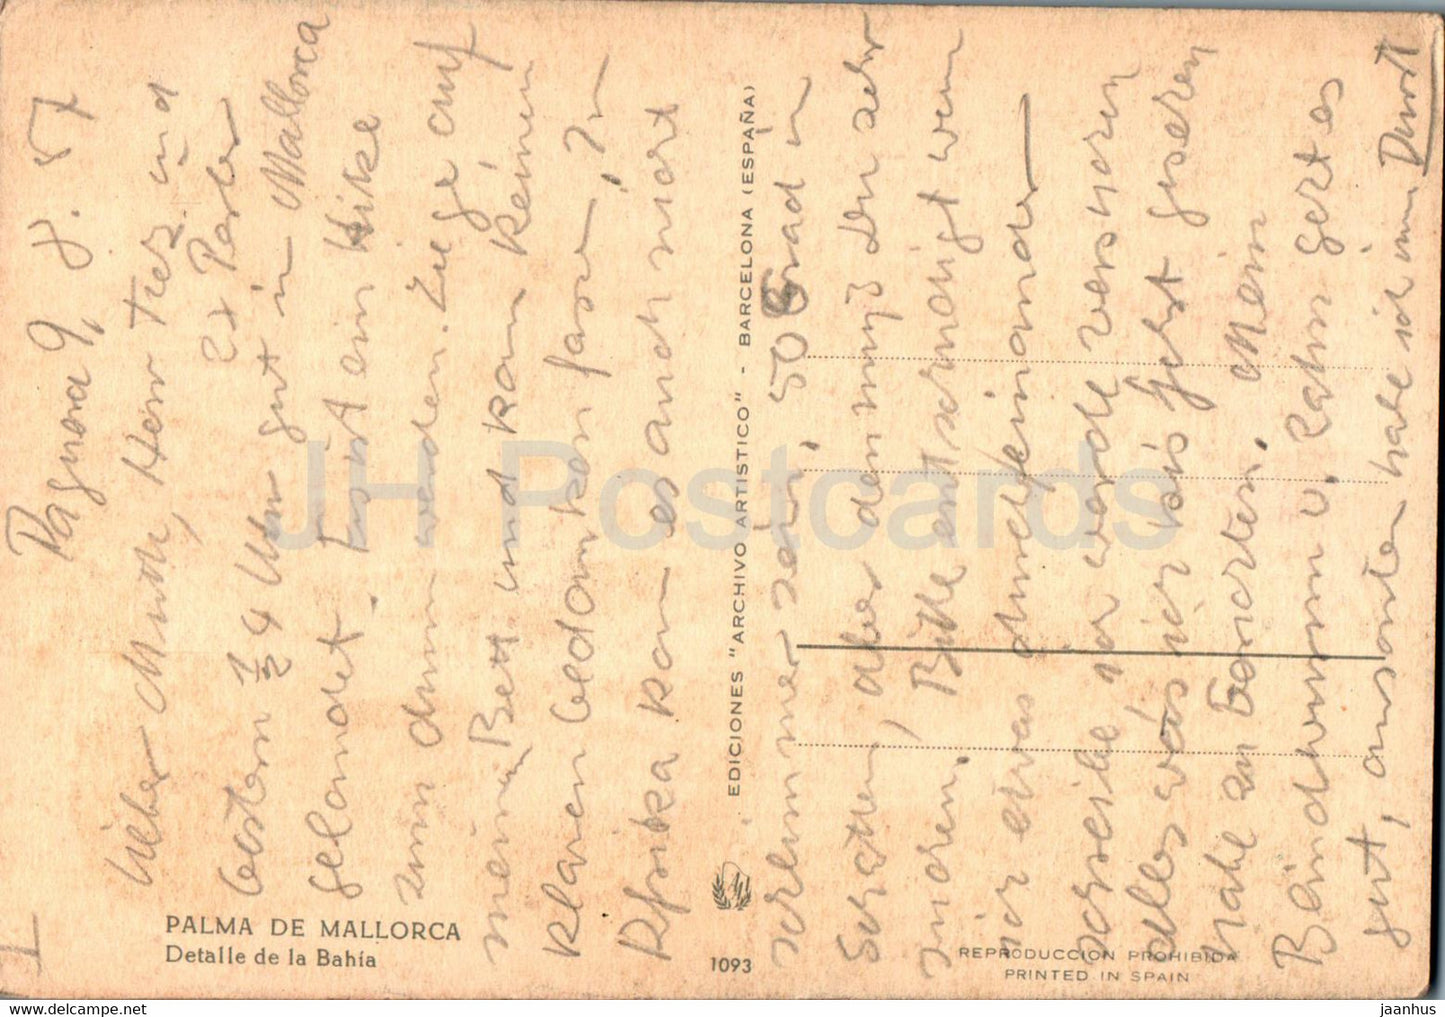 Palma de Majorque - Detalle de la Bahia - bateau - carte postale ancienne - 1093 - Espagne - inutilisé